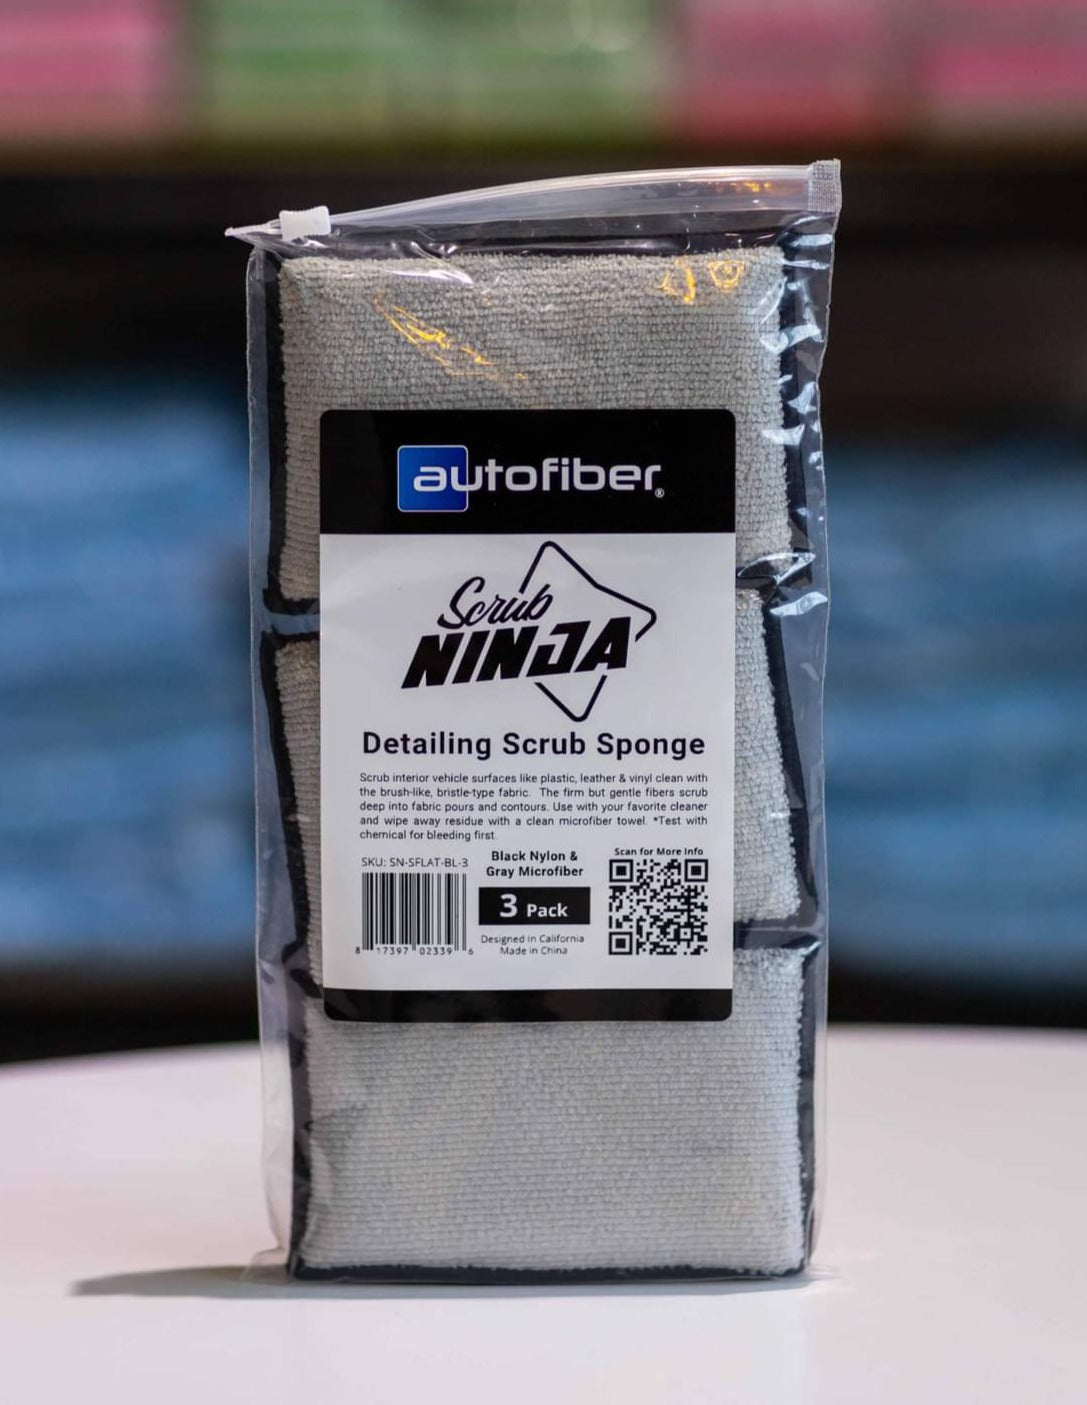 Autofiber Scrub Ninja - Interior Scrubbing Sponge- 3 Pack